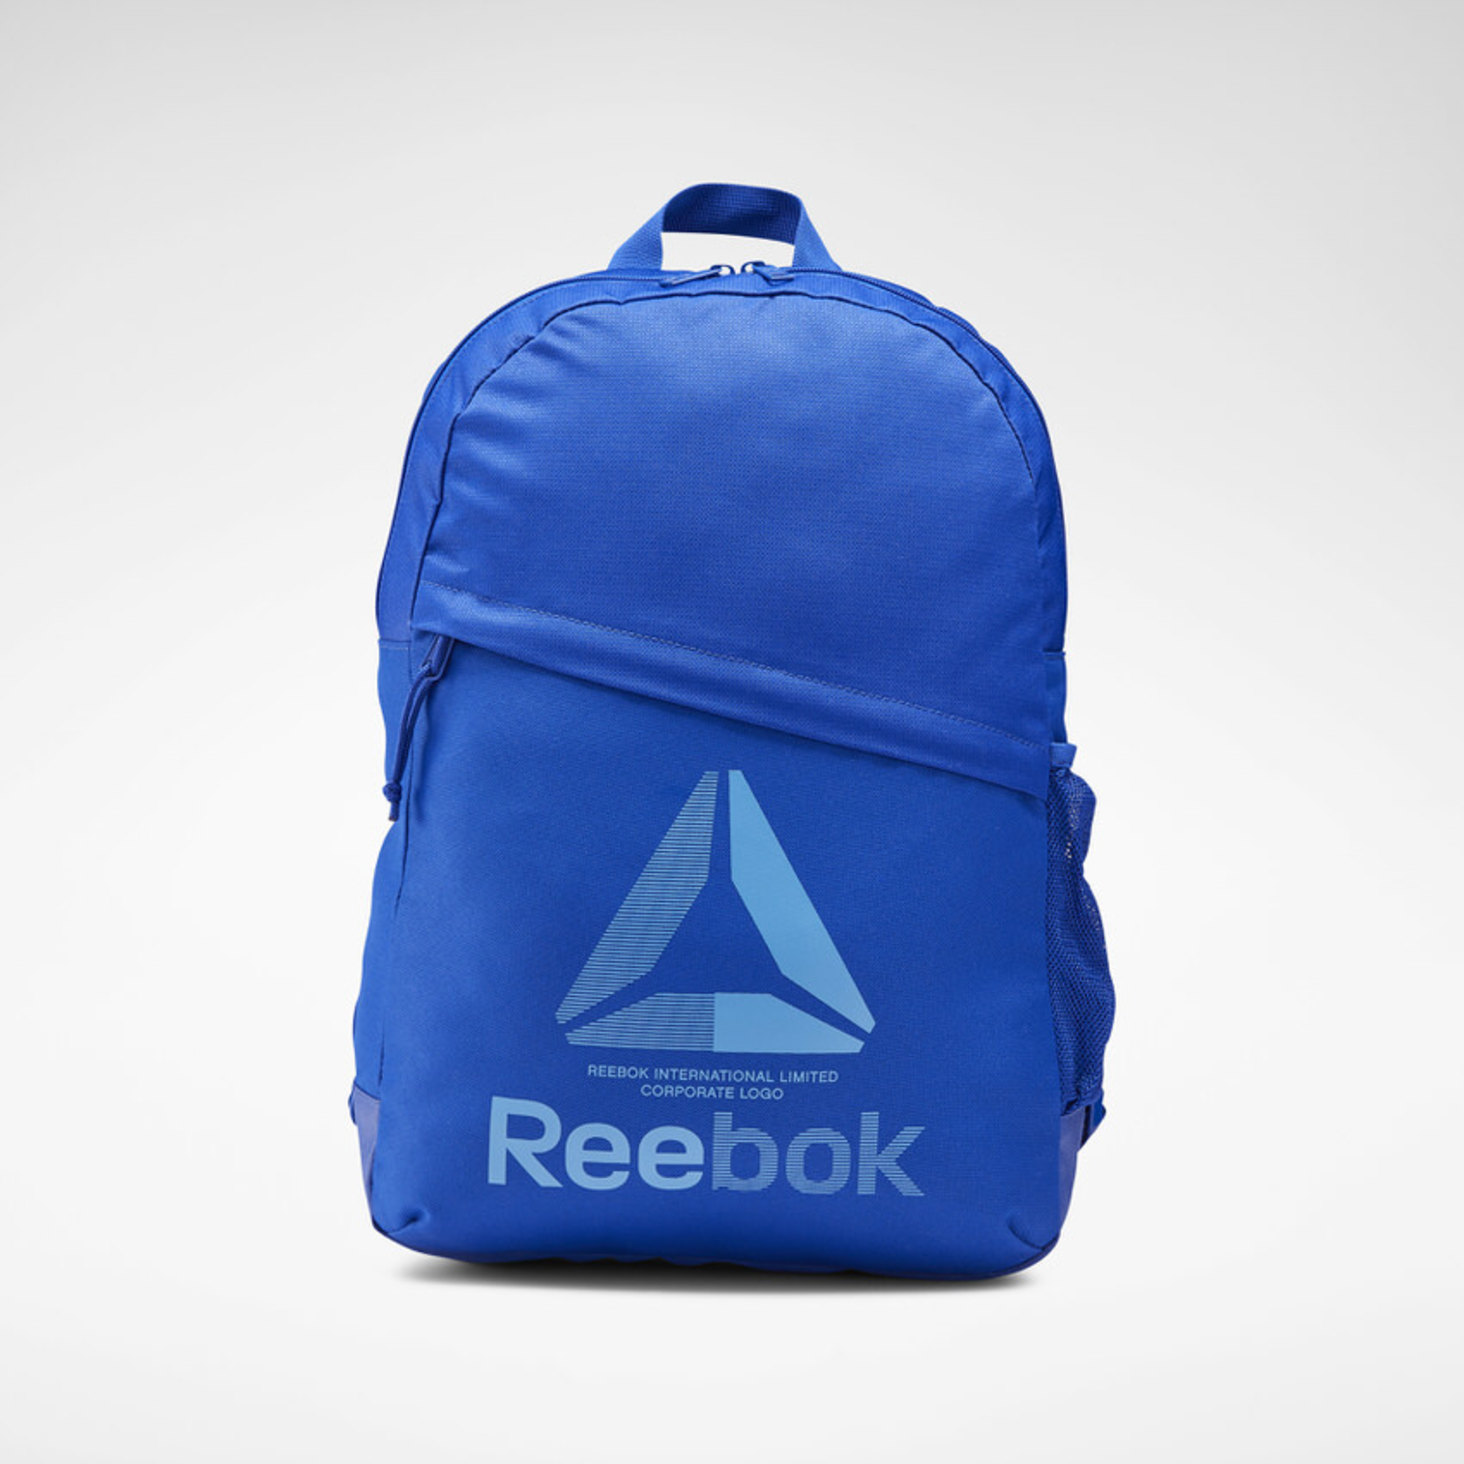 Essentials Backpack